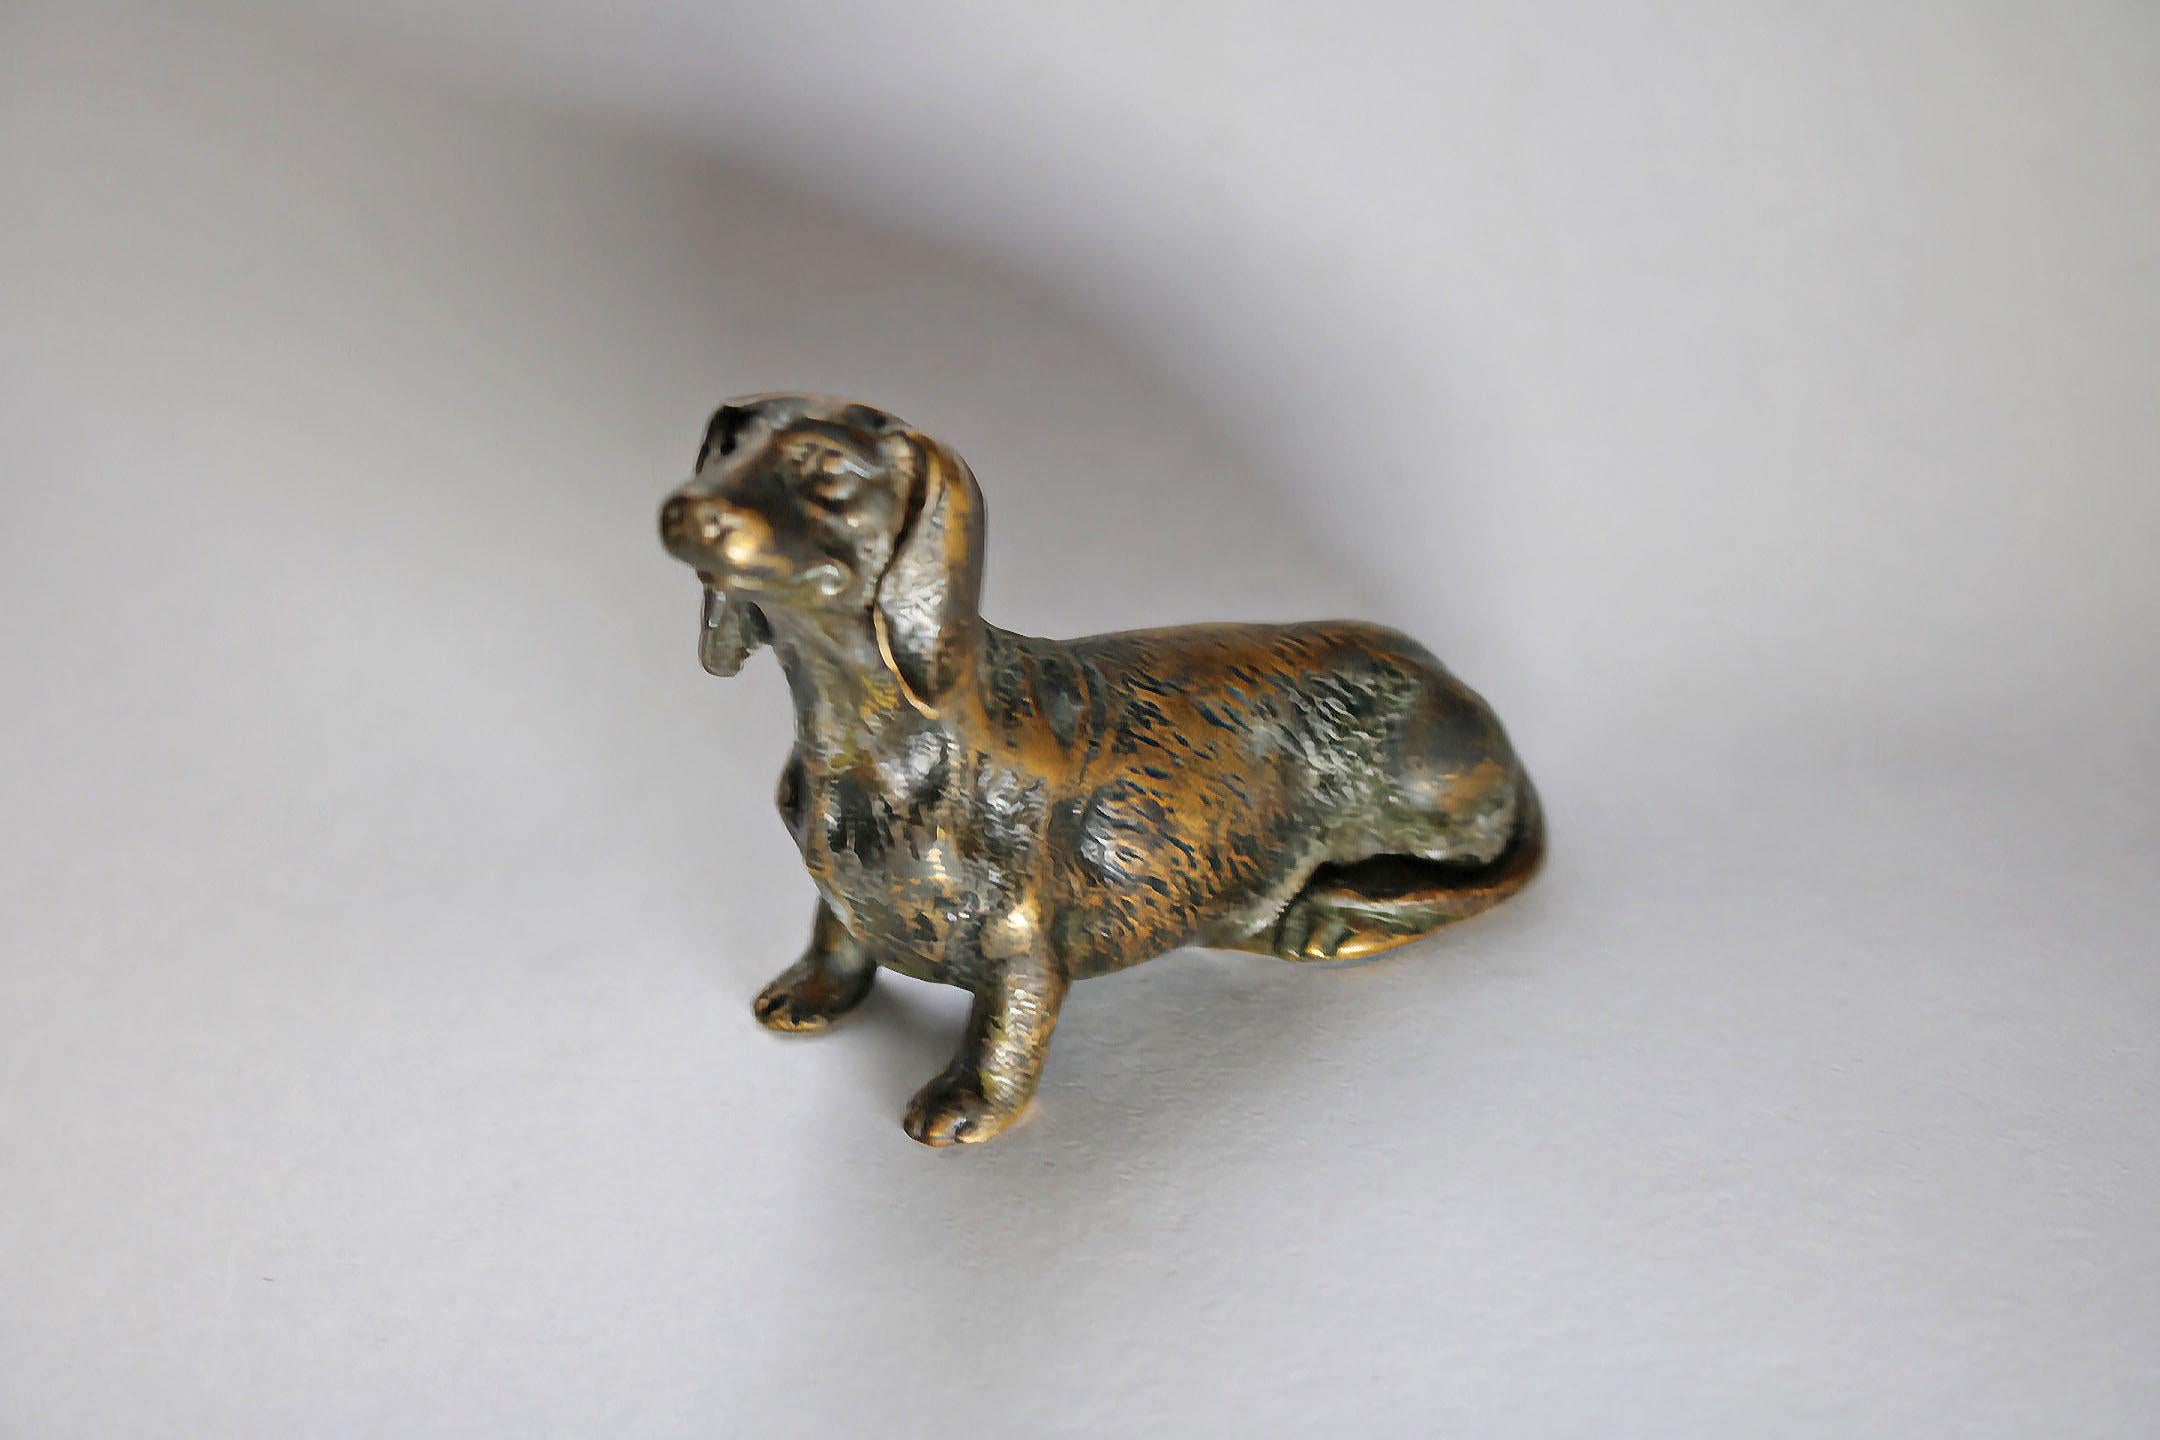 A beautiful miniature bronze sculpture, part of a collection